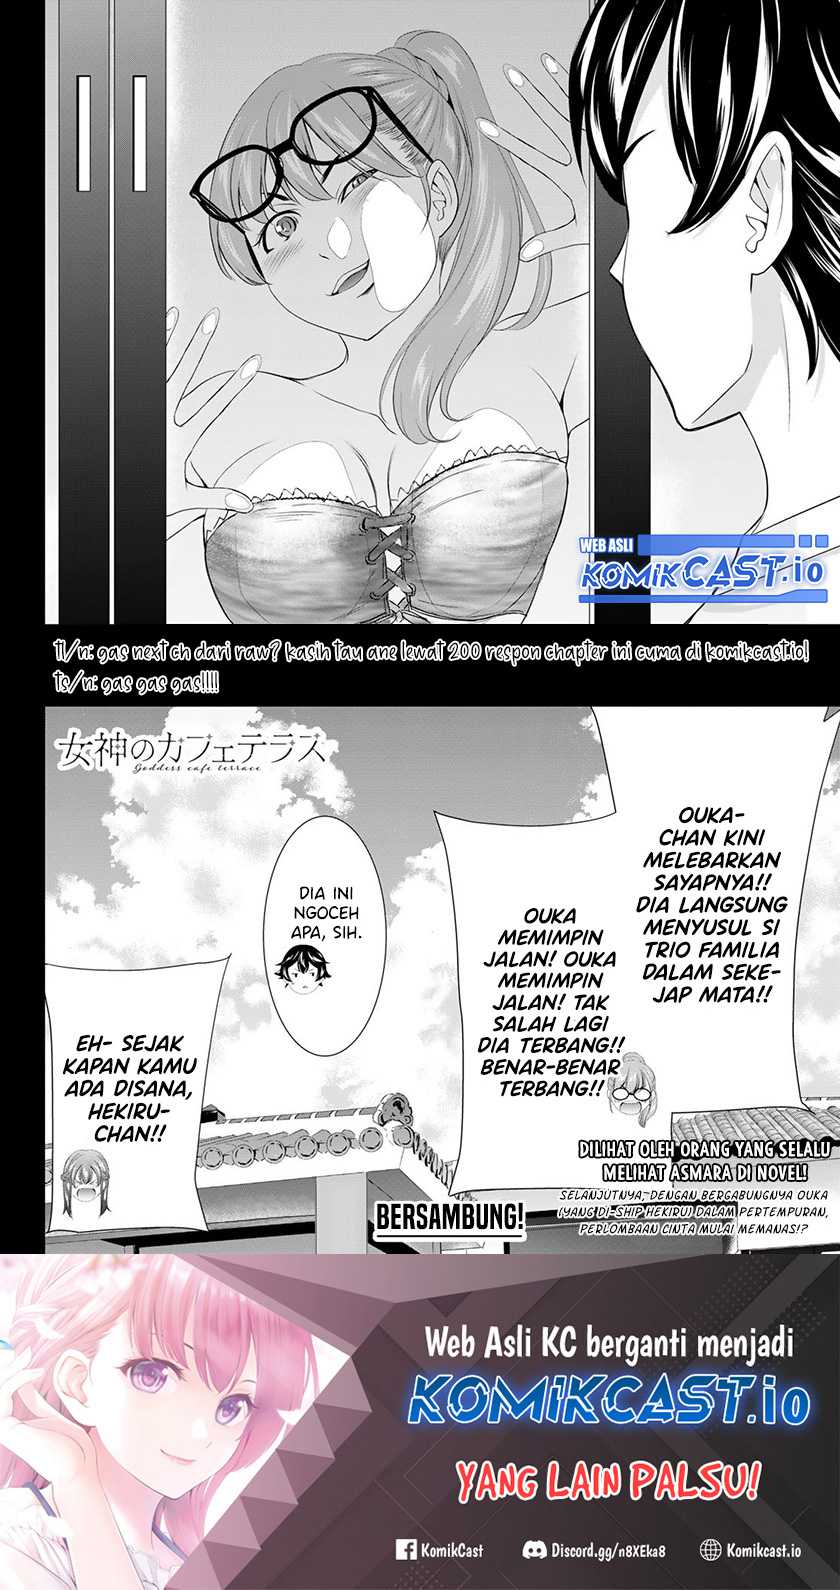 Megami no Kafeterasu (Goddess Café Terrace) Chapter 113